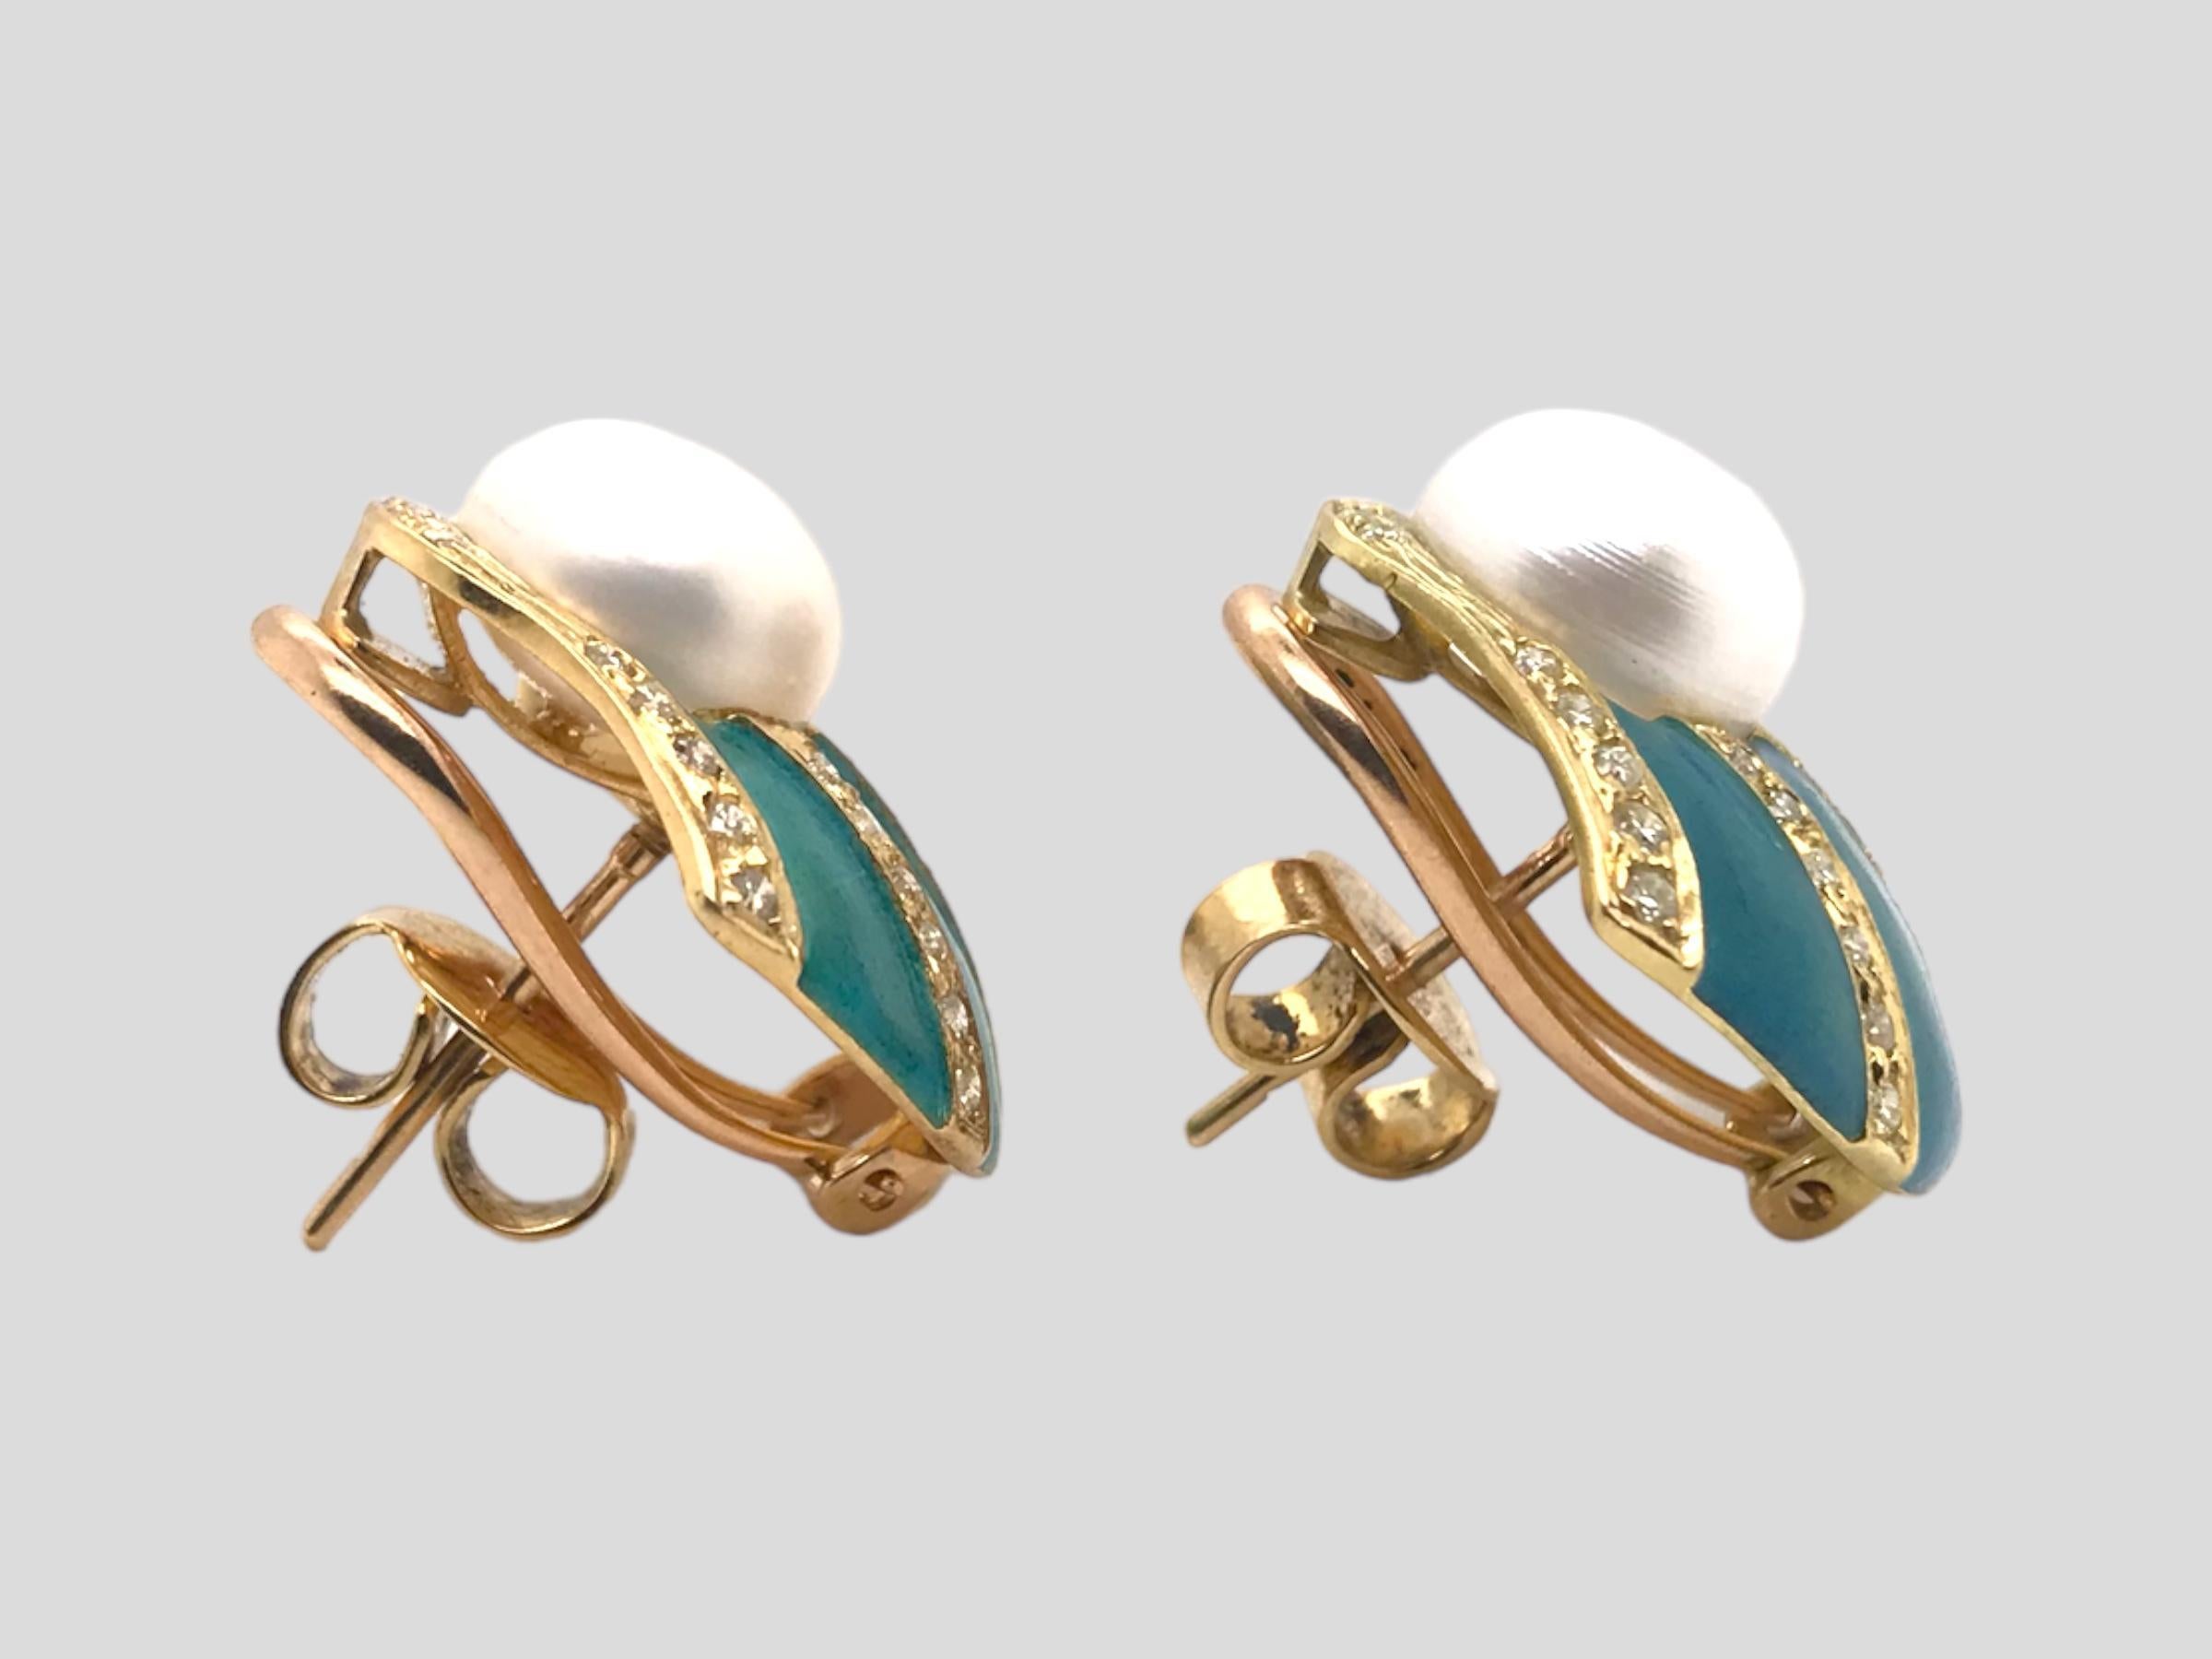 Brilliant Cut Turquoise Colored Enamel Shell Shaped Pearl & Diamond Earrings 18K Yellow Gold